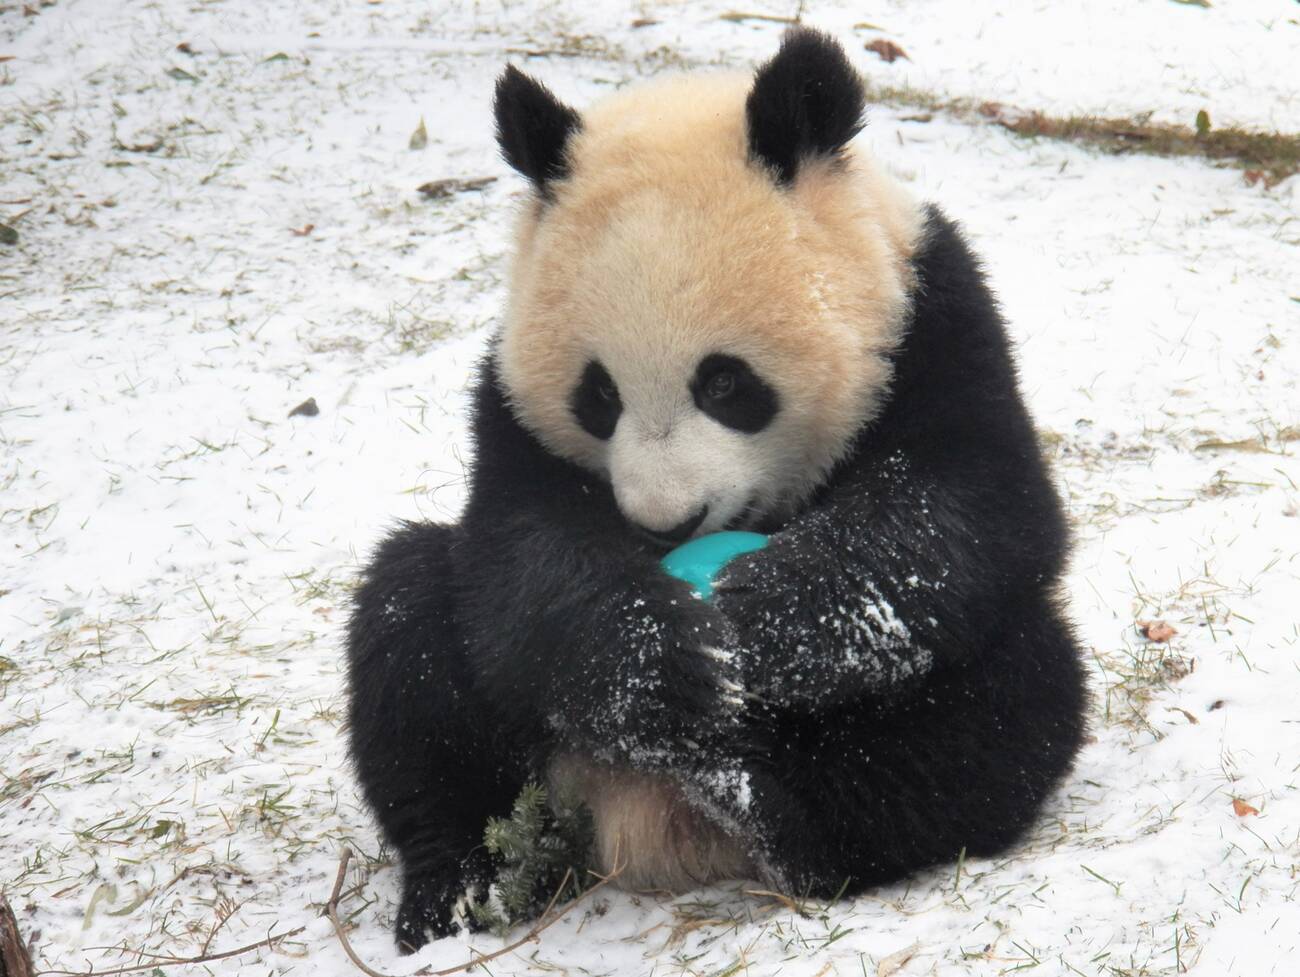 Toronto Zoo In Global Tweet-Off Over Cute Animals